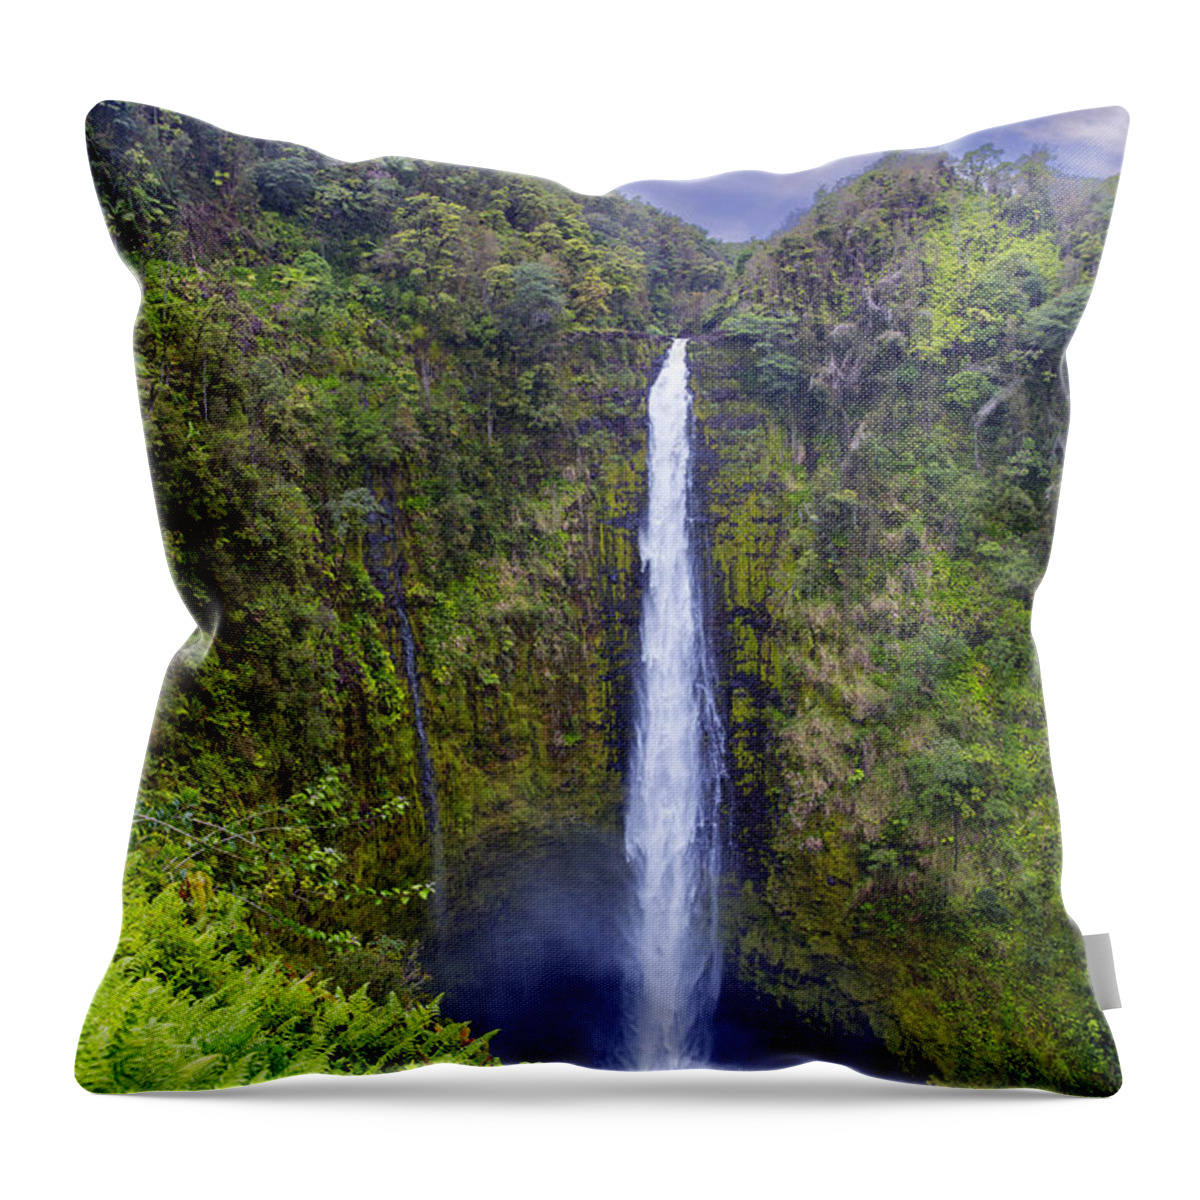 Akaka Falls Throw Pillow featuring the photograph Akaka Falls by Bill and Linda Tiepelman